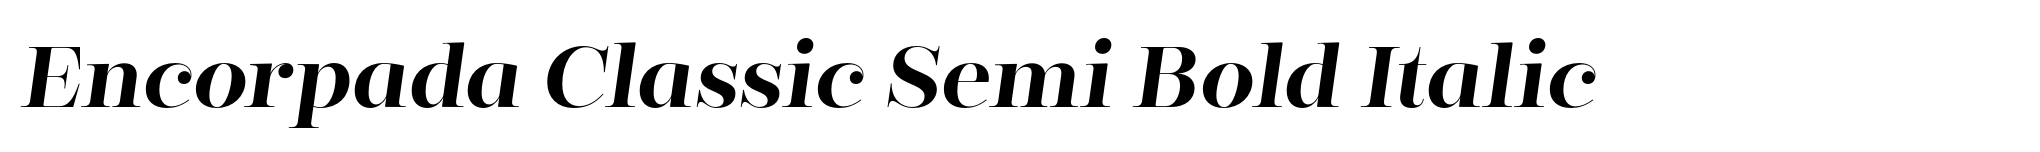 Encorpada Classic Semi Bold Italic image